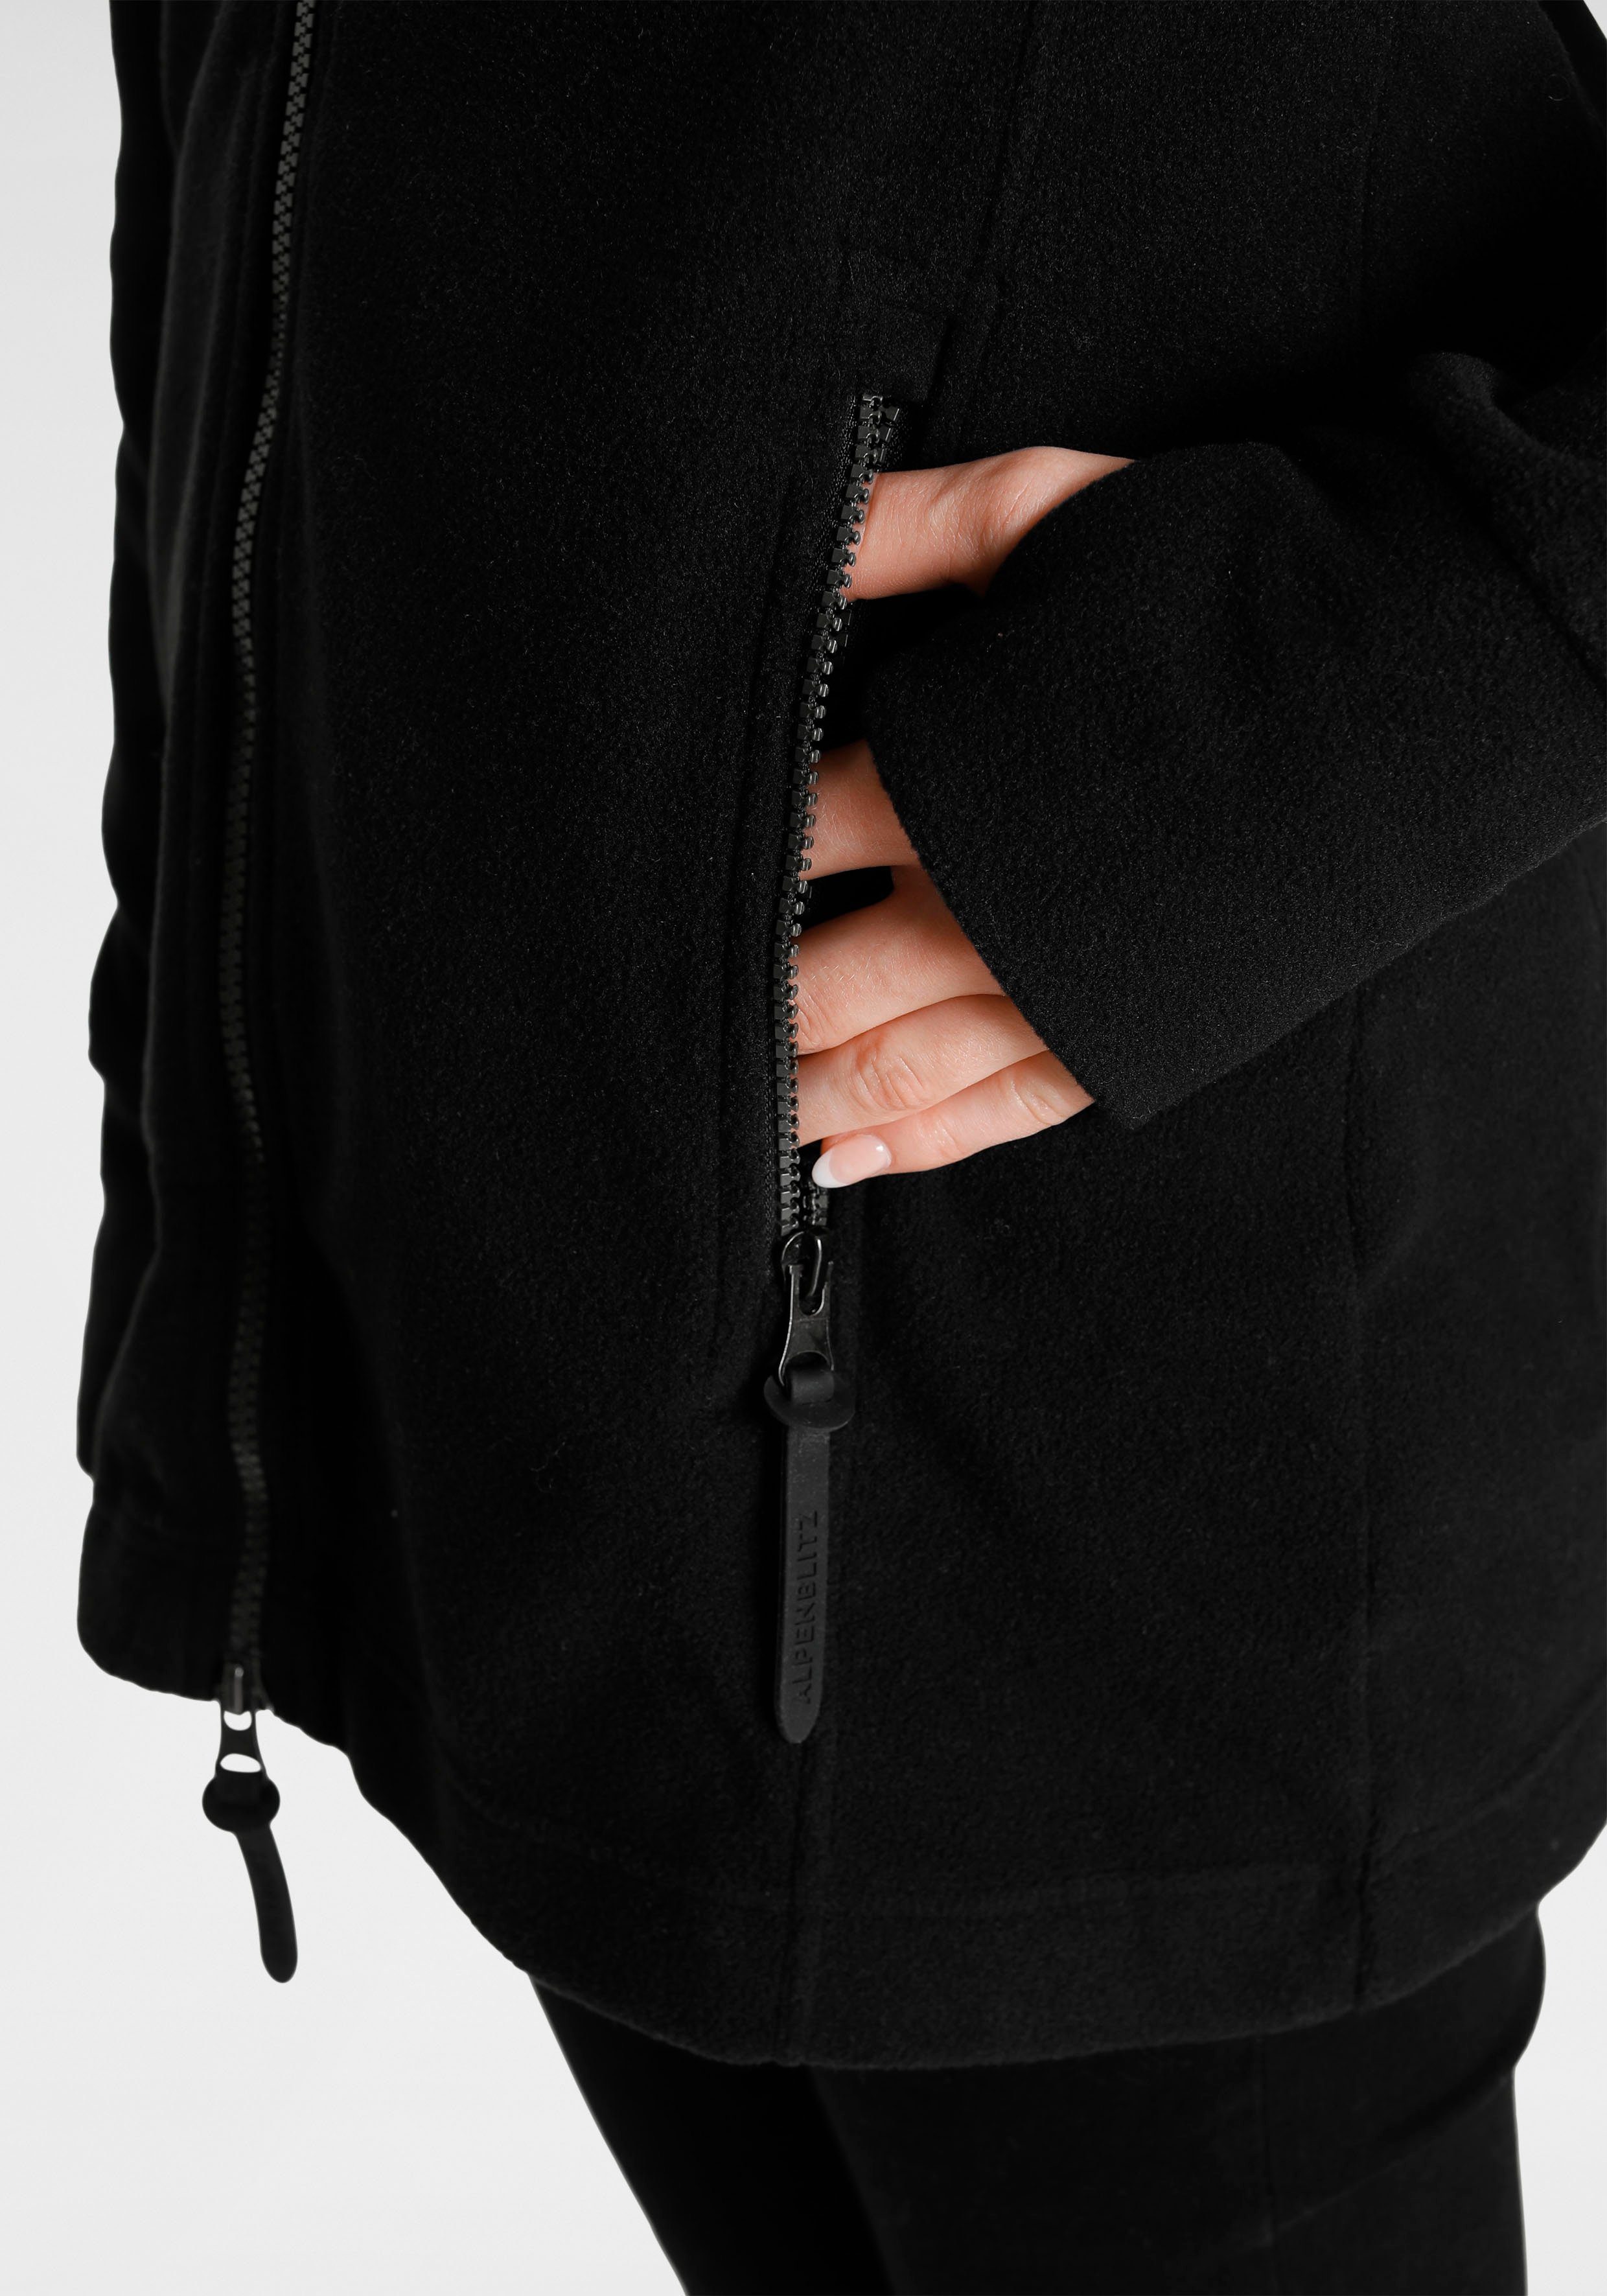 ALPENBLITZ Kapuzensweatjacke Teiji Fleece aus schwarz Kapuze und abnehmbarer 2-Wege-Reißverschluss mit Material